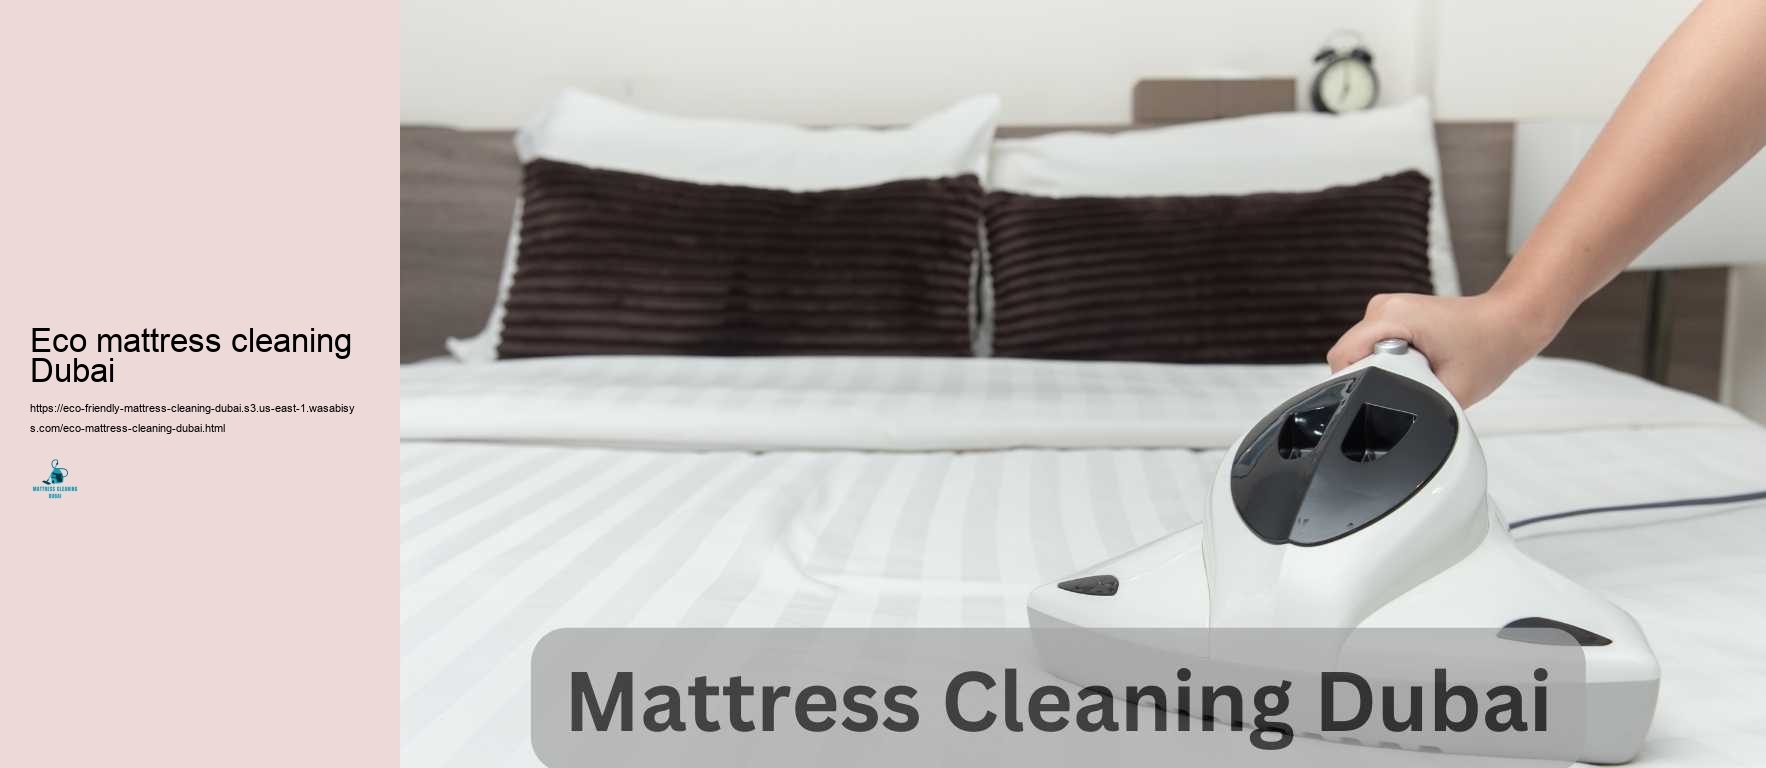 Eco mattress cleaning Dubai